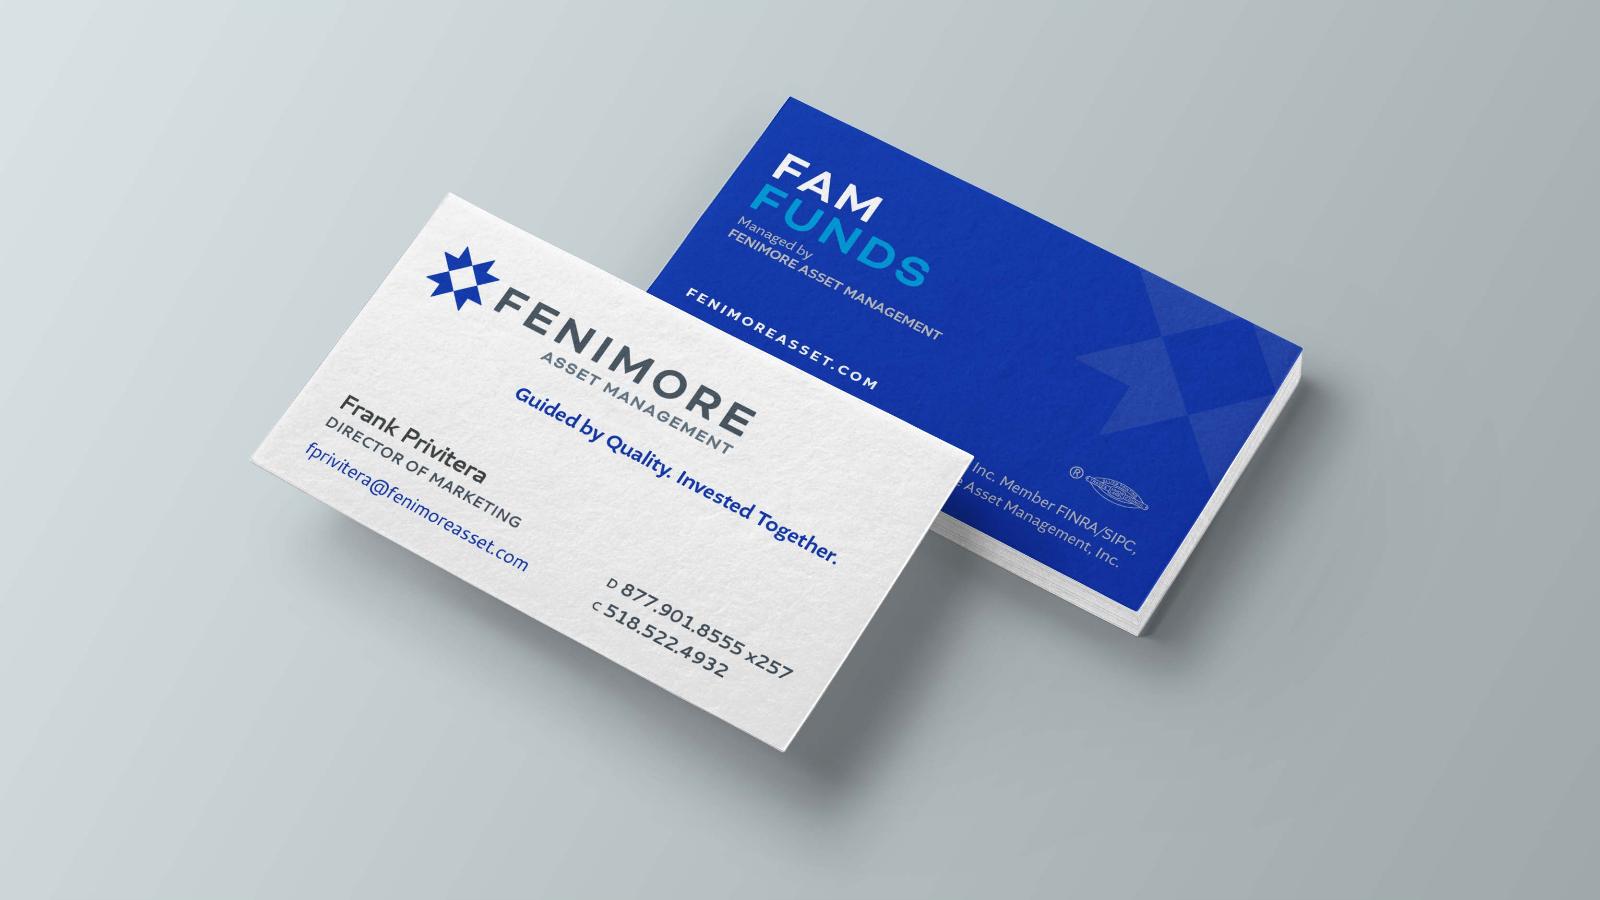 Fenimore Asset Management | Business Card Design